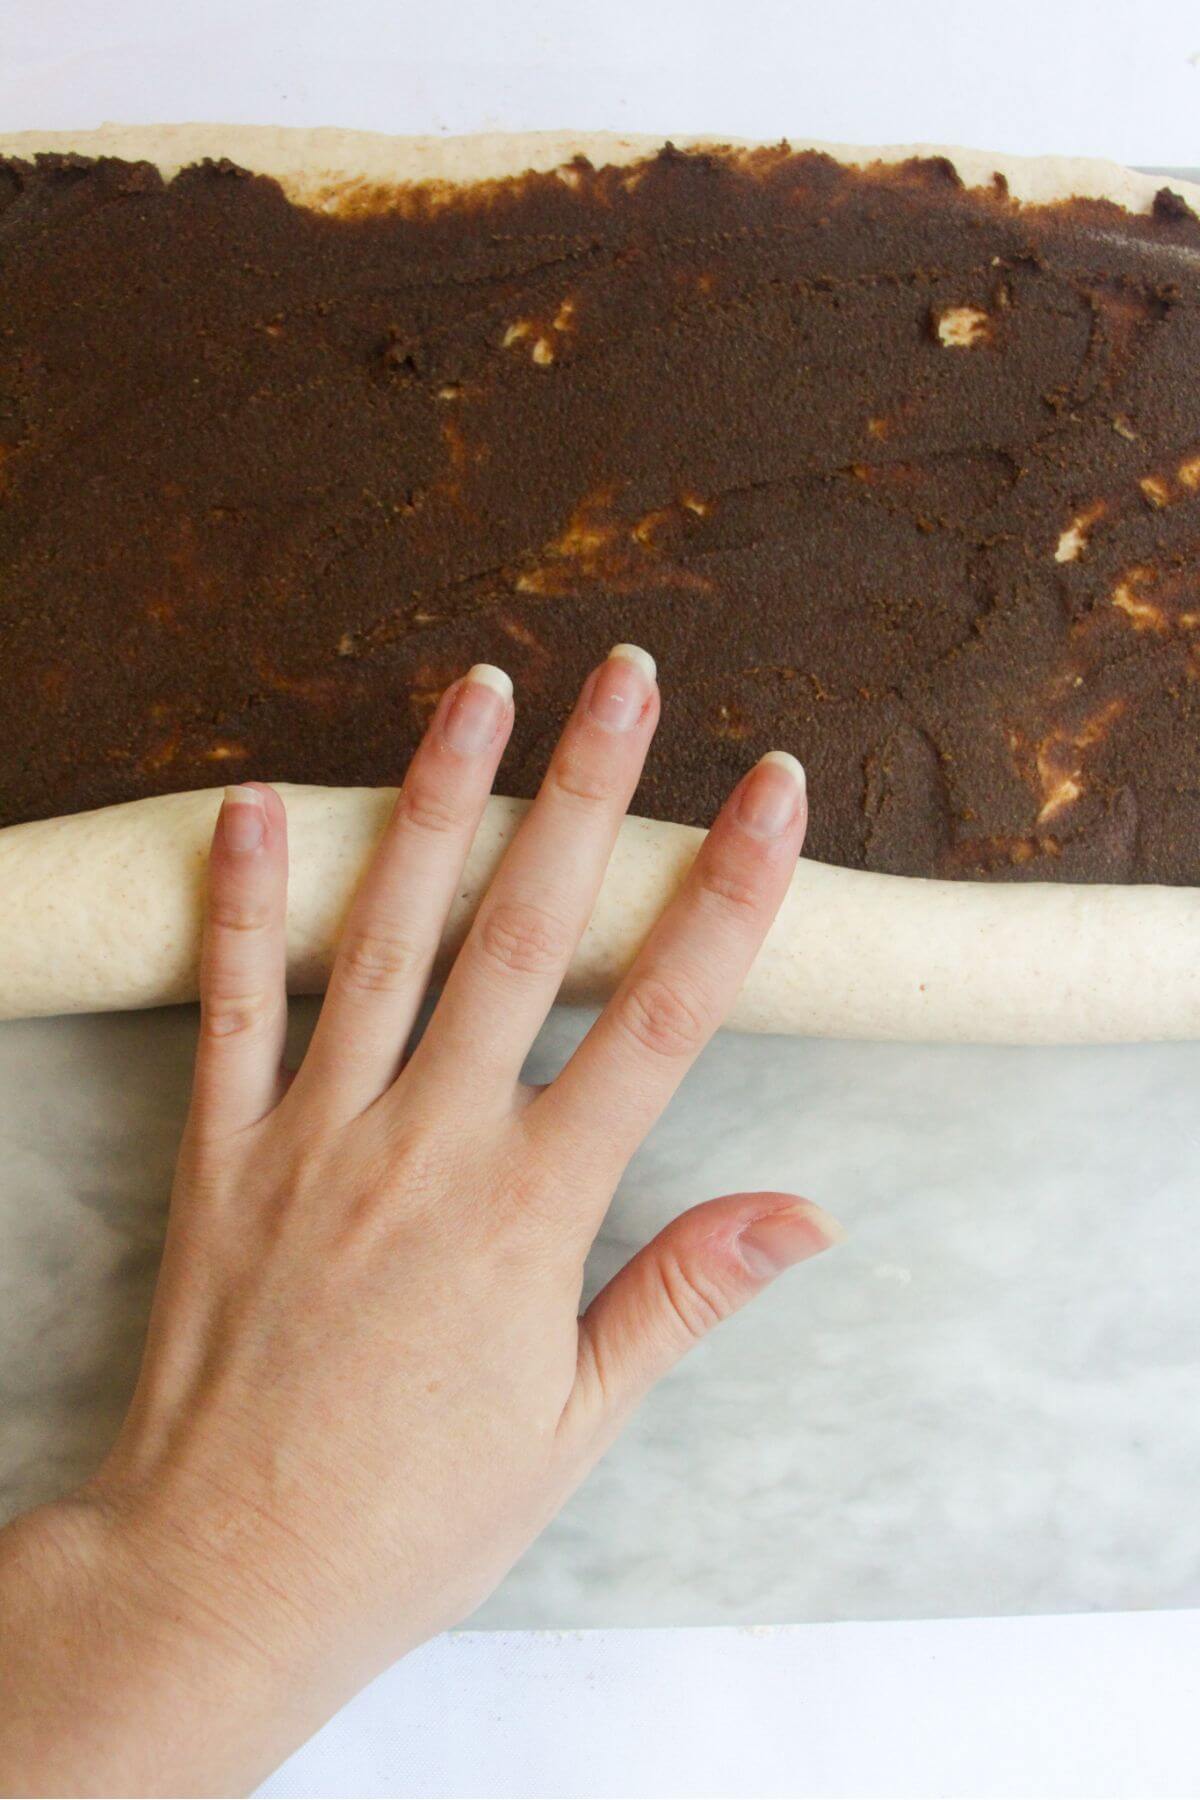 Hand rolling up pumpkin spice butter spread dough into a long log.